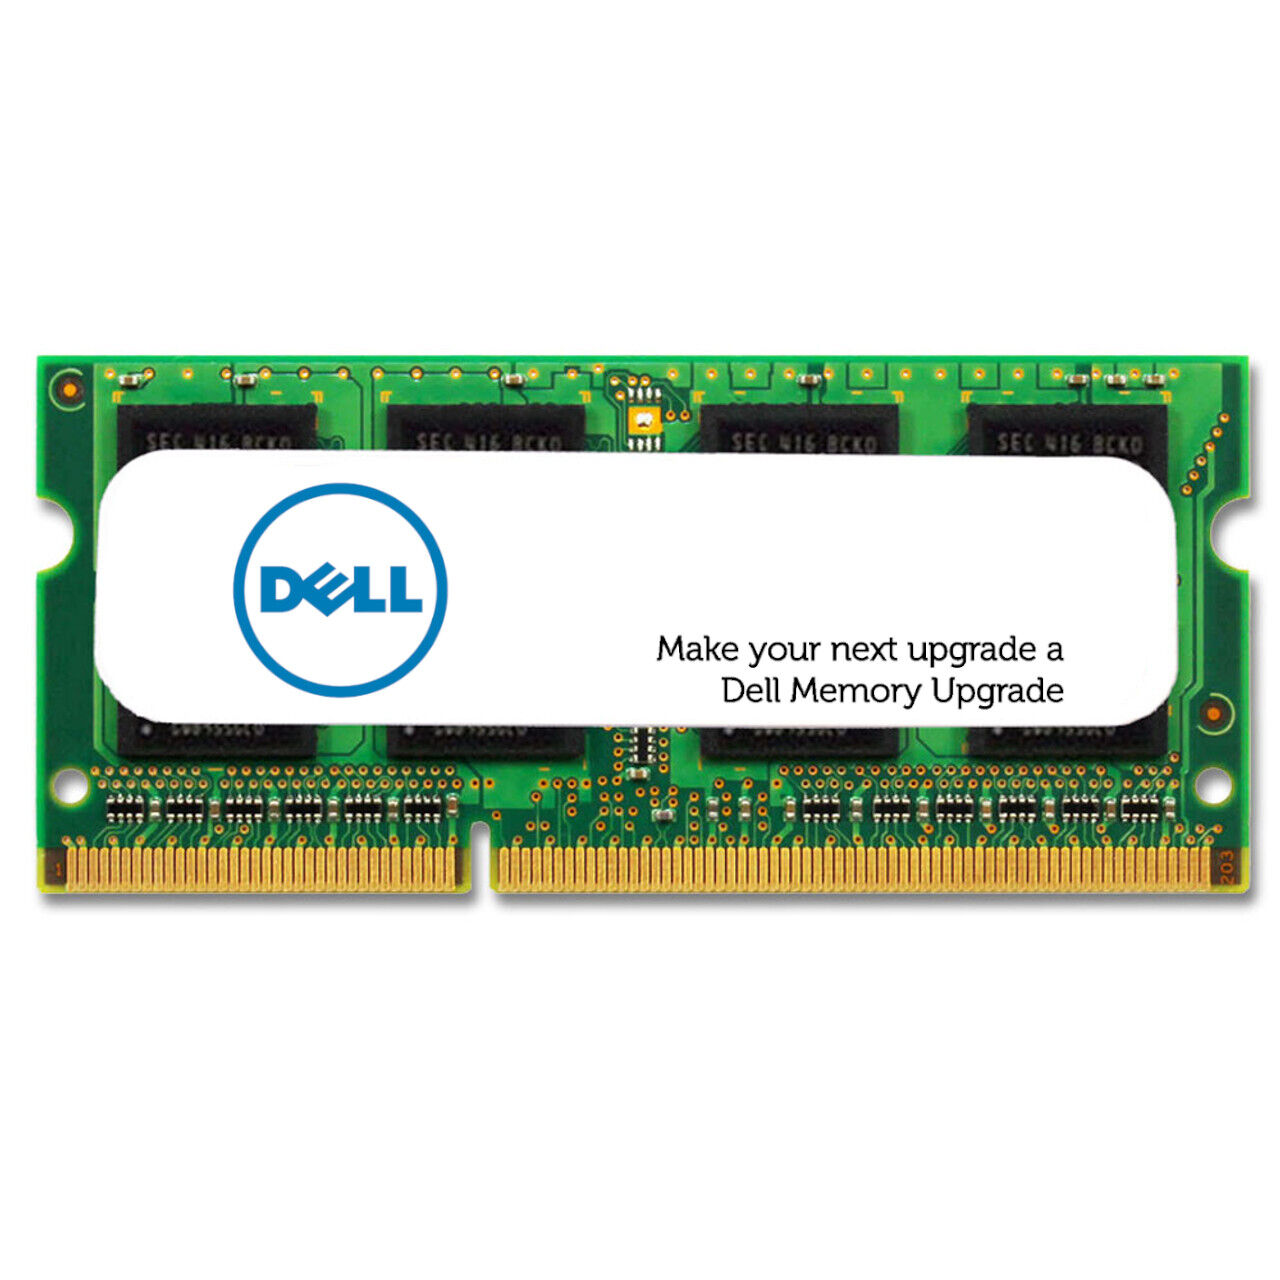 Dell Memory SNPN2M64C/8G A7022339 8GB 2Rx8 DDR3 SODIMM 1600MHz RAM